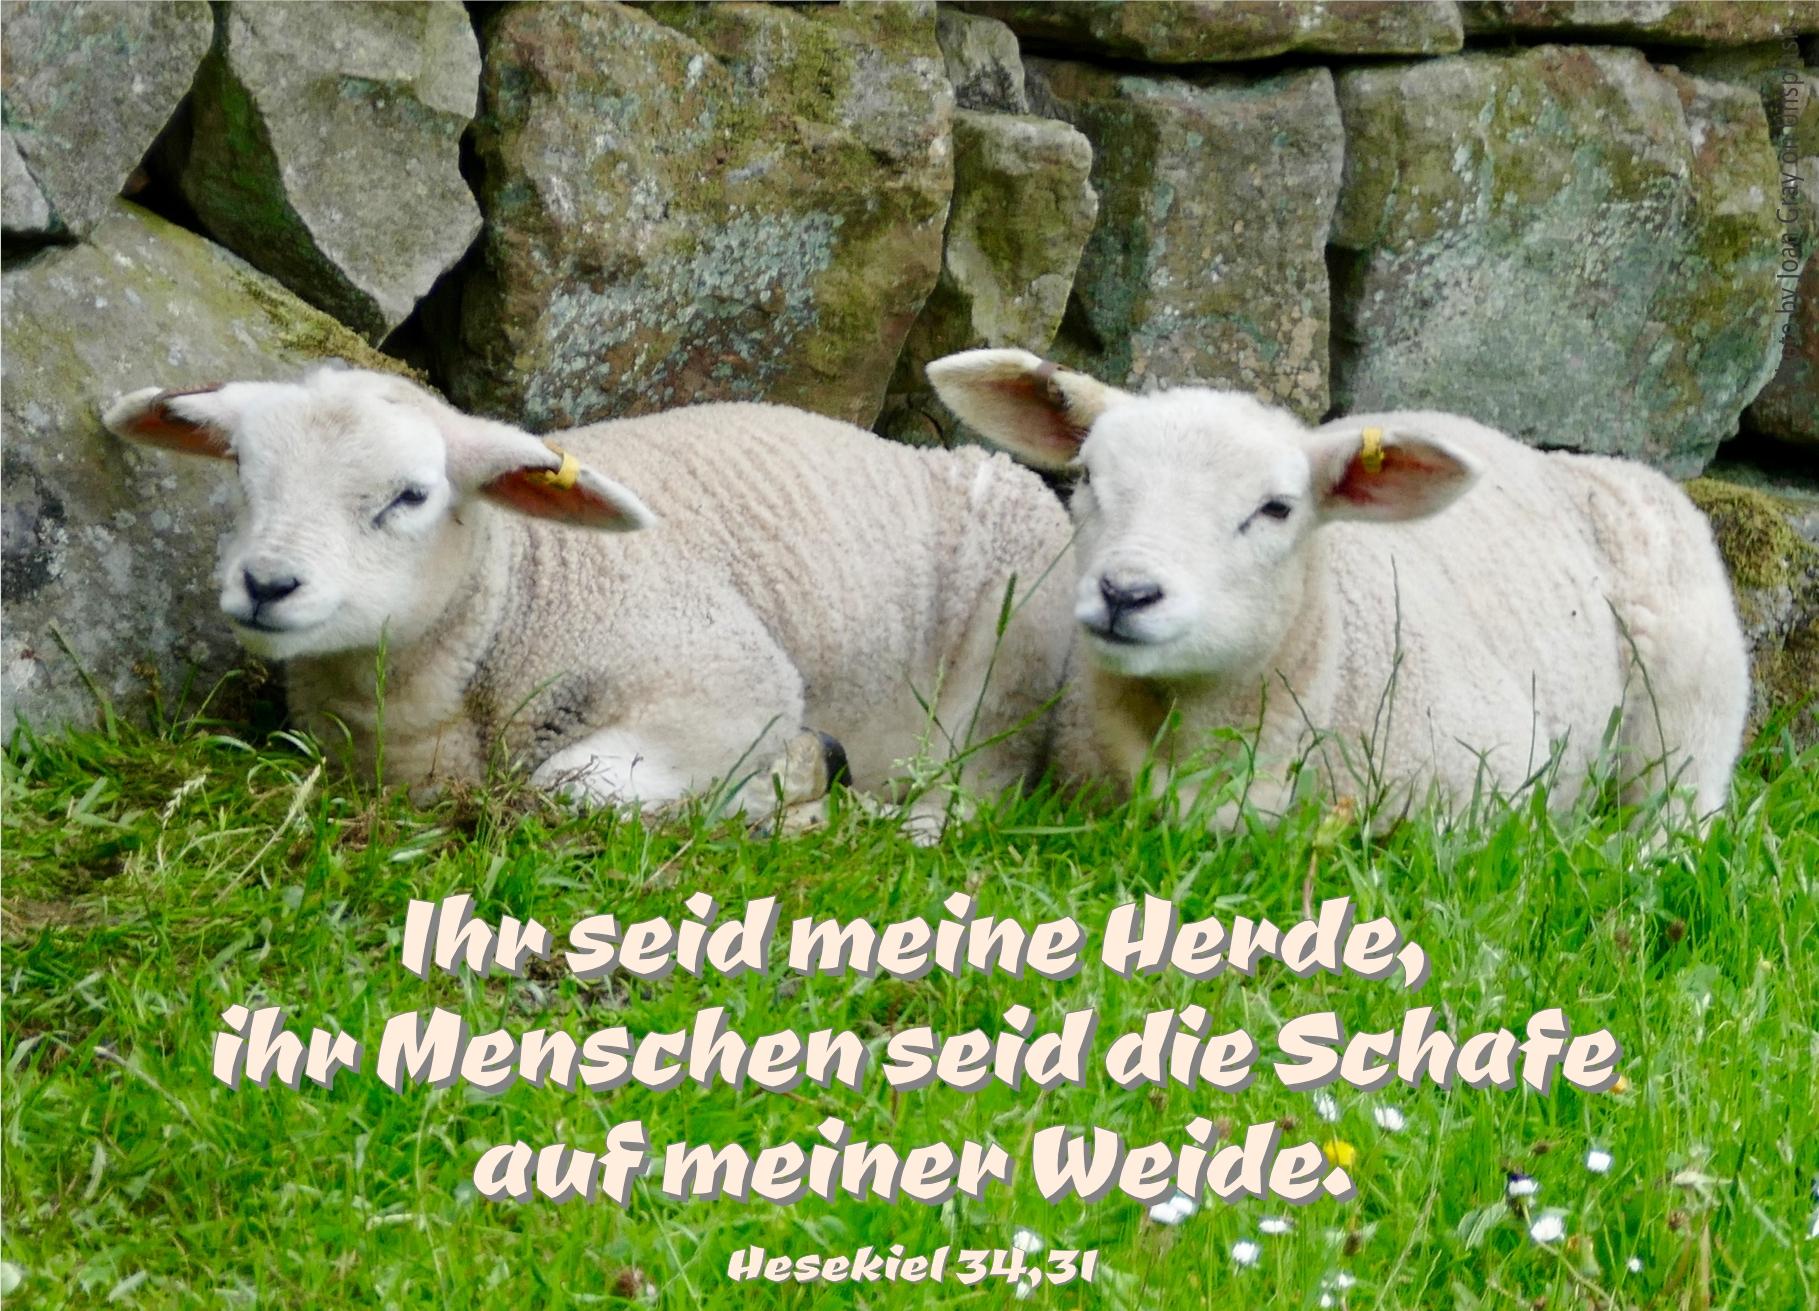 alt="zwei_Schafe_liegen_vor_Steinmauer_erwartet_bibelhoerbuch_die_botschaft_des_Waechters"